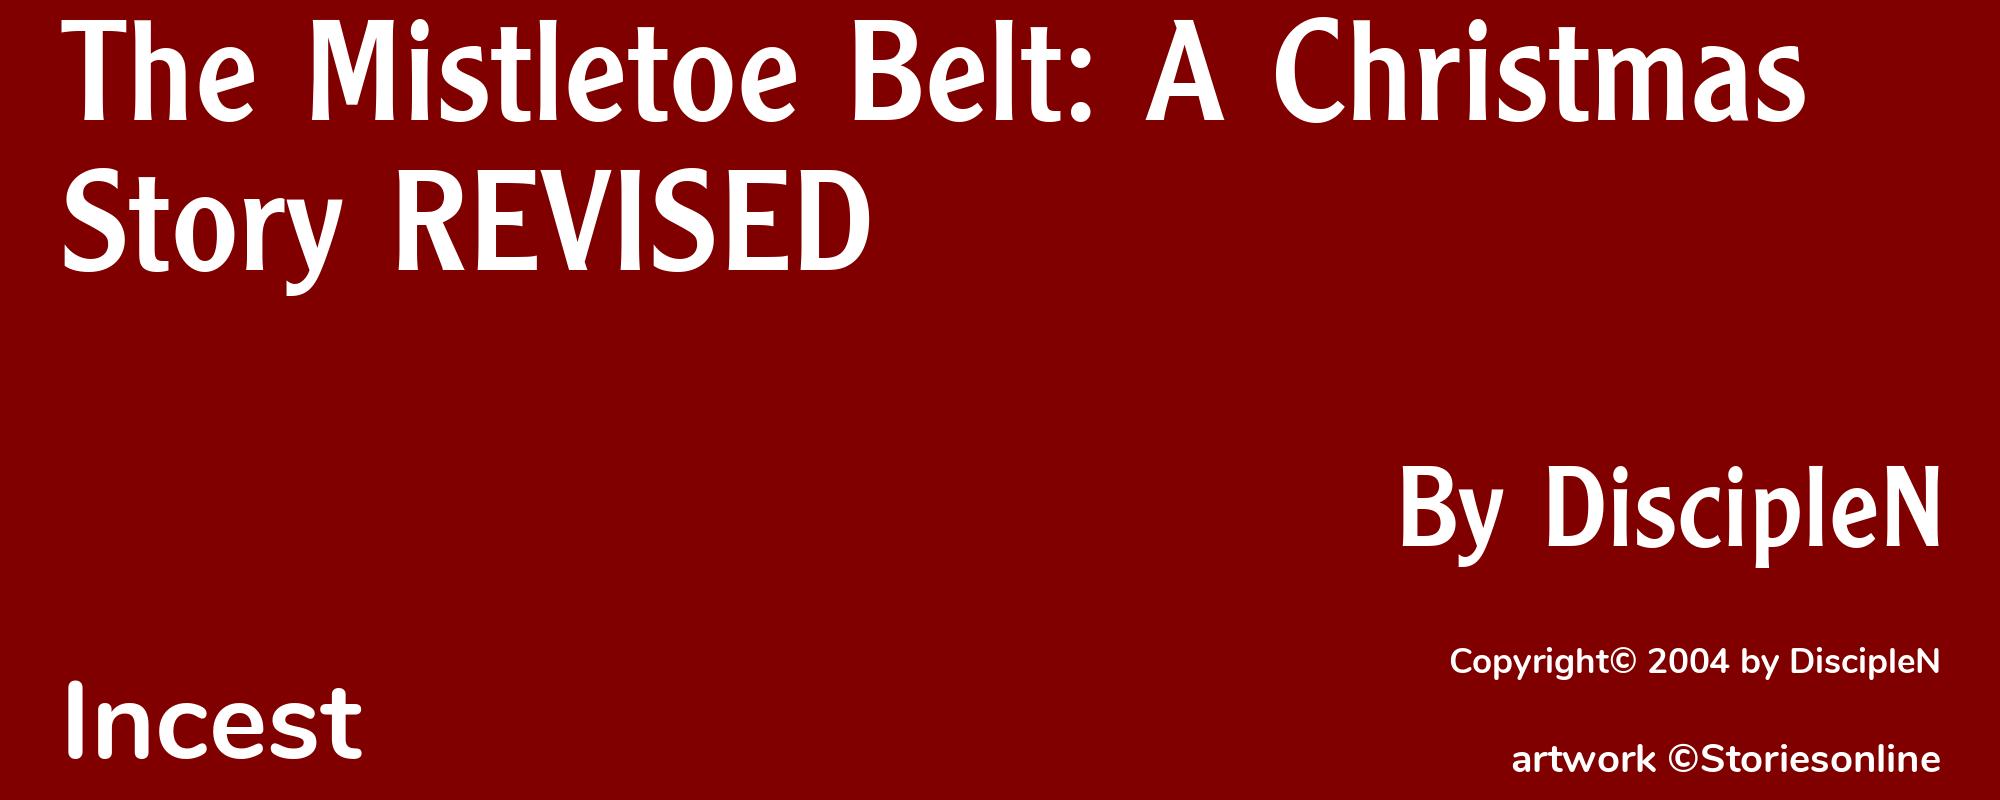 The Mistletoe Belt: A Christmas Story REVISED - Cover